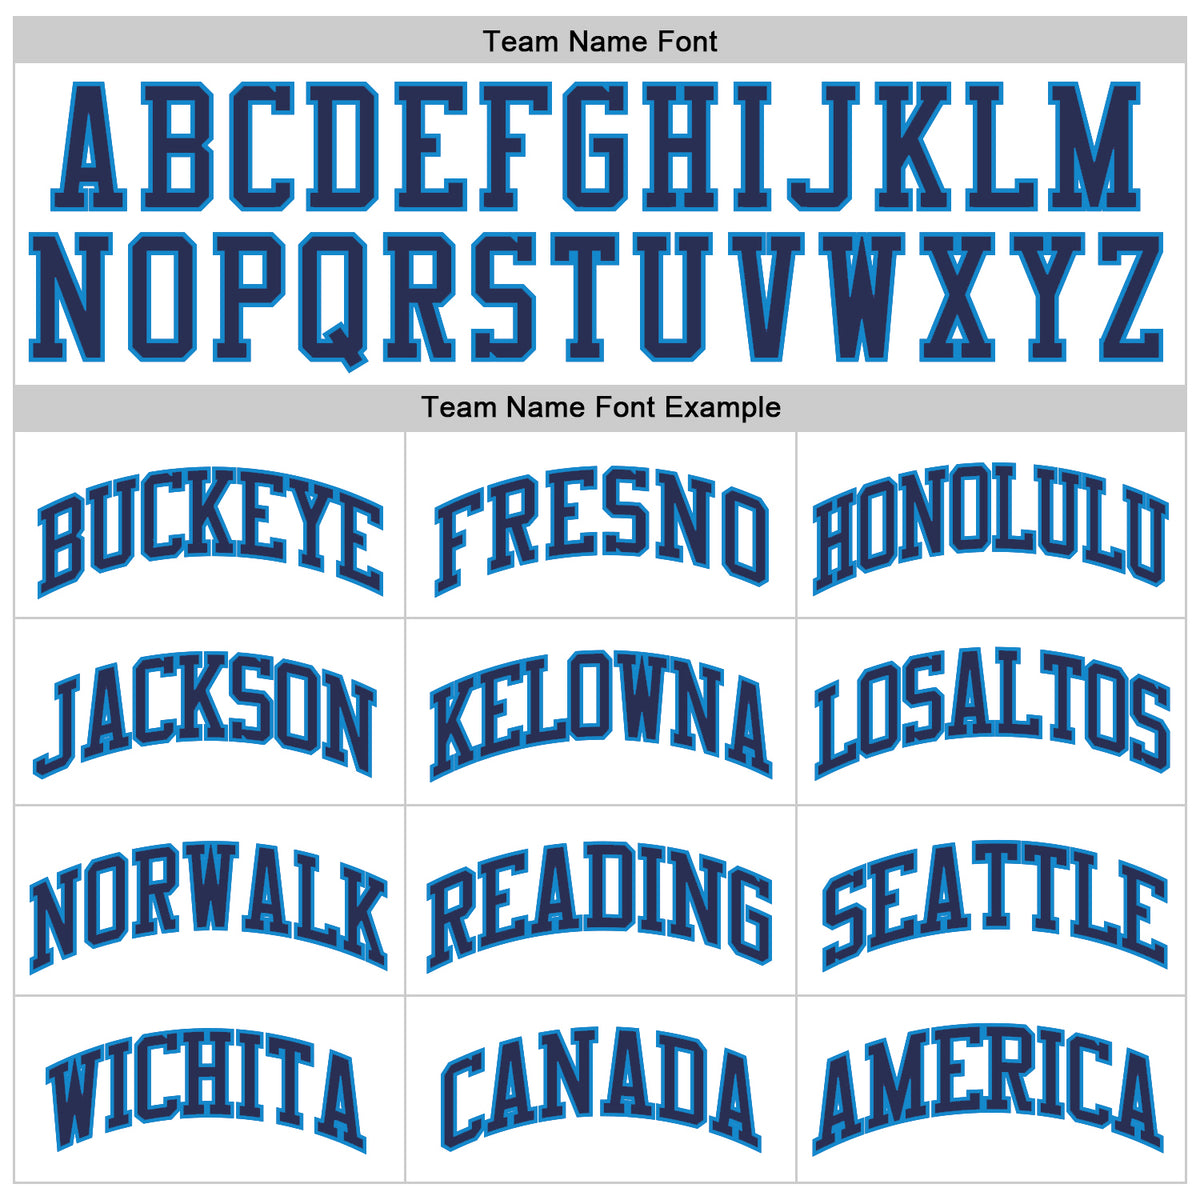 Custom Name & Number Blue White-Navy Throwback Basketball Jersey